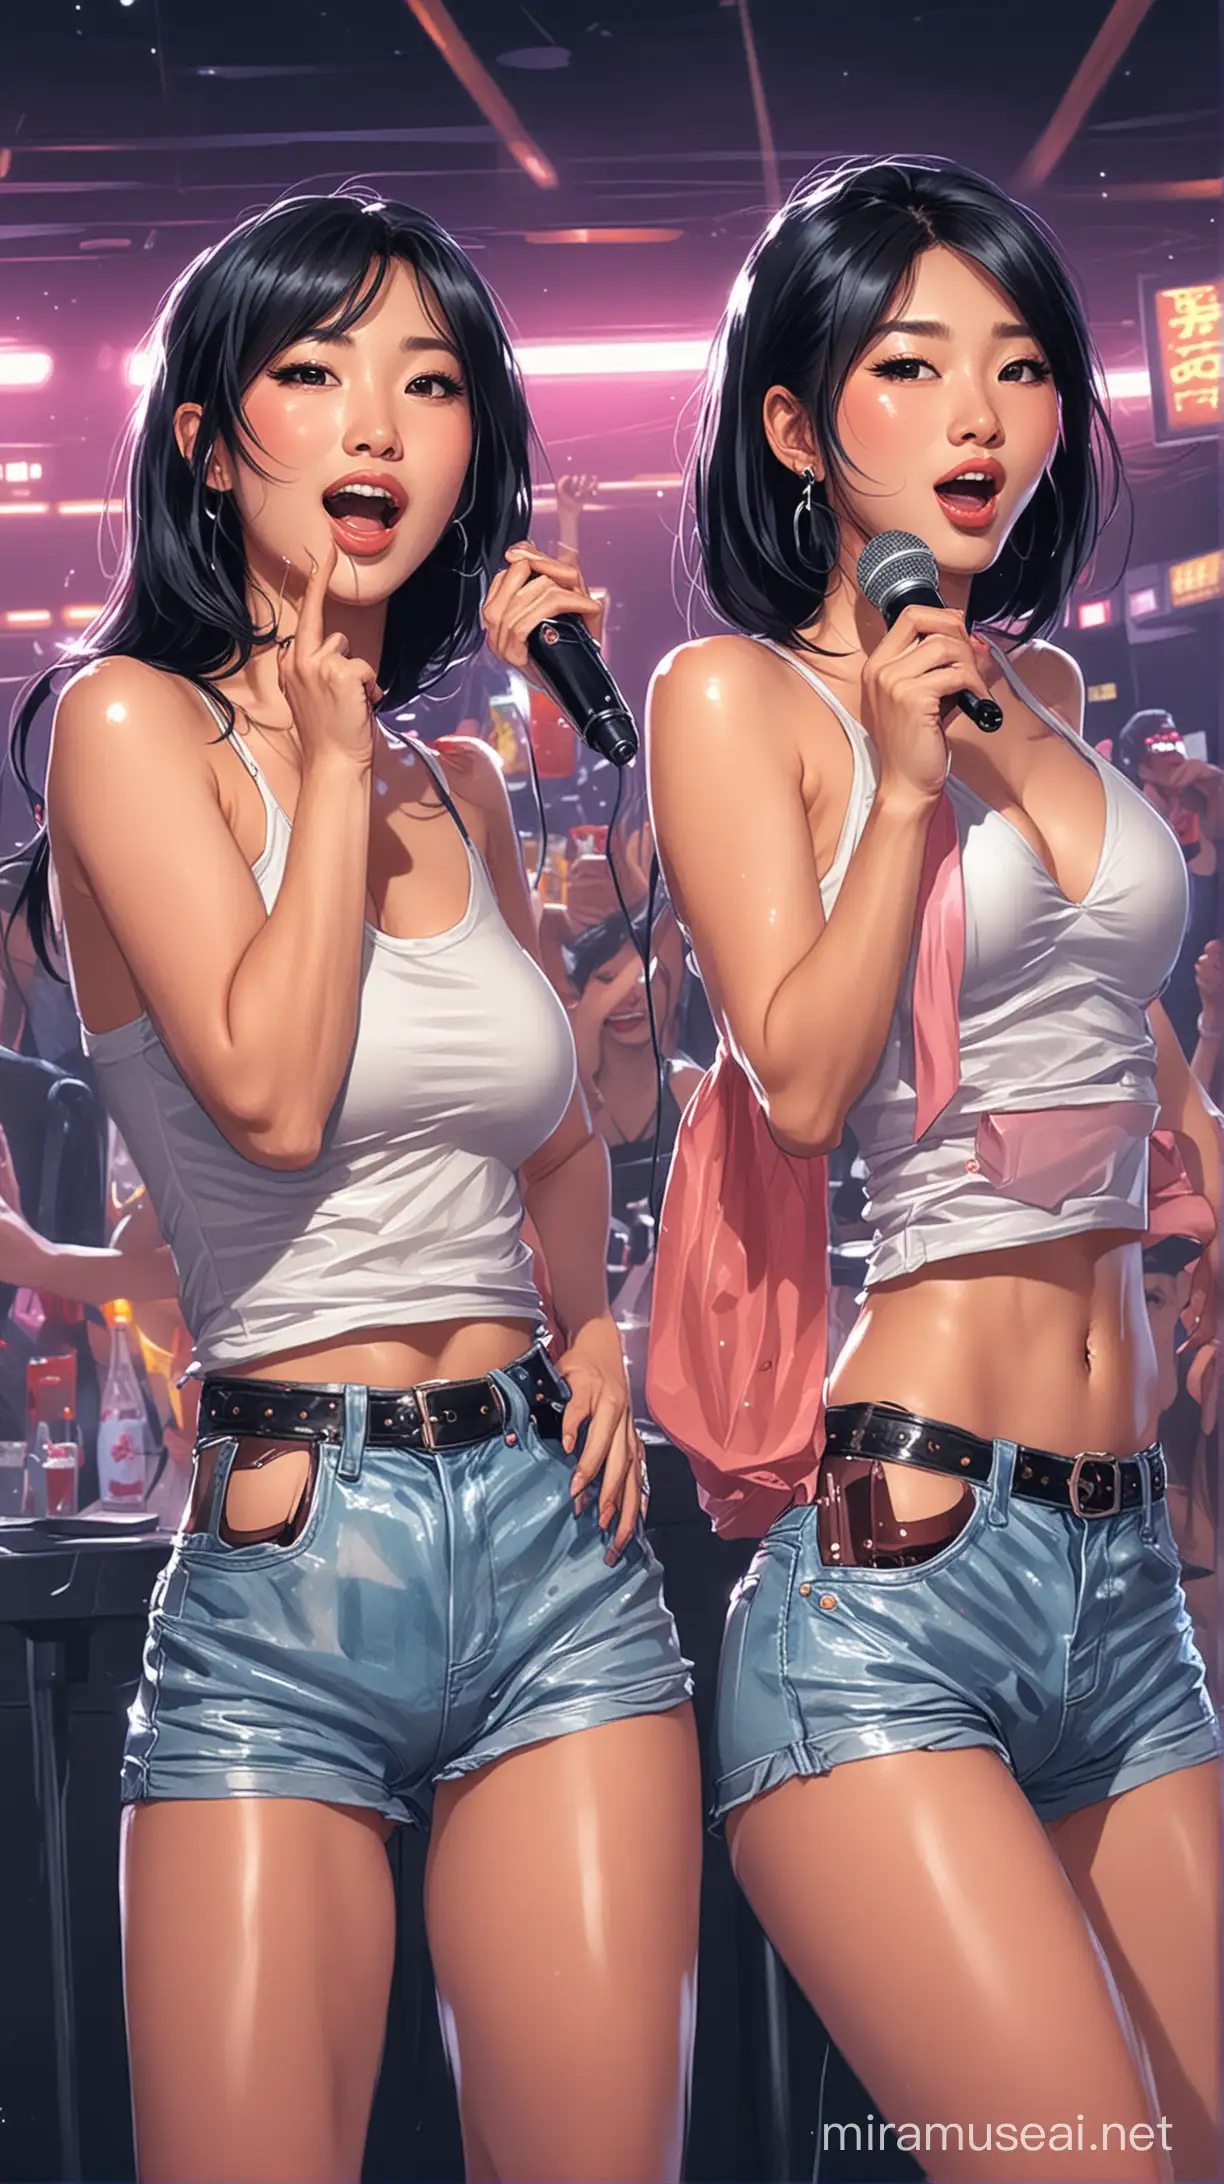 Two Asian Friends Enjoying Karaoke Night in a ComicStyle Club